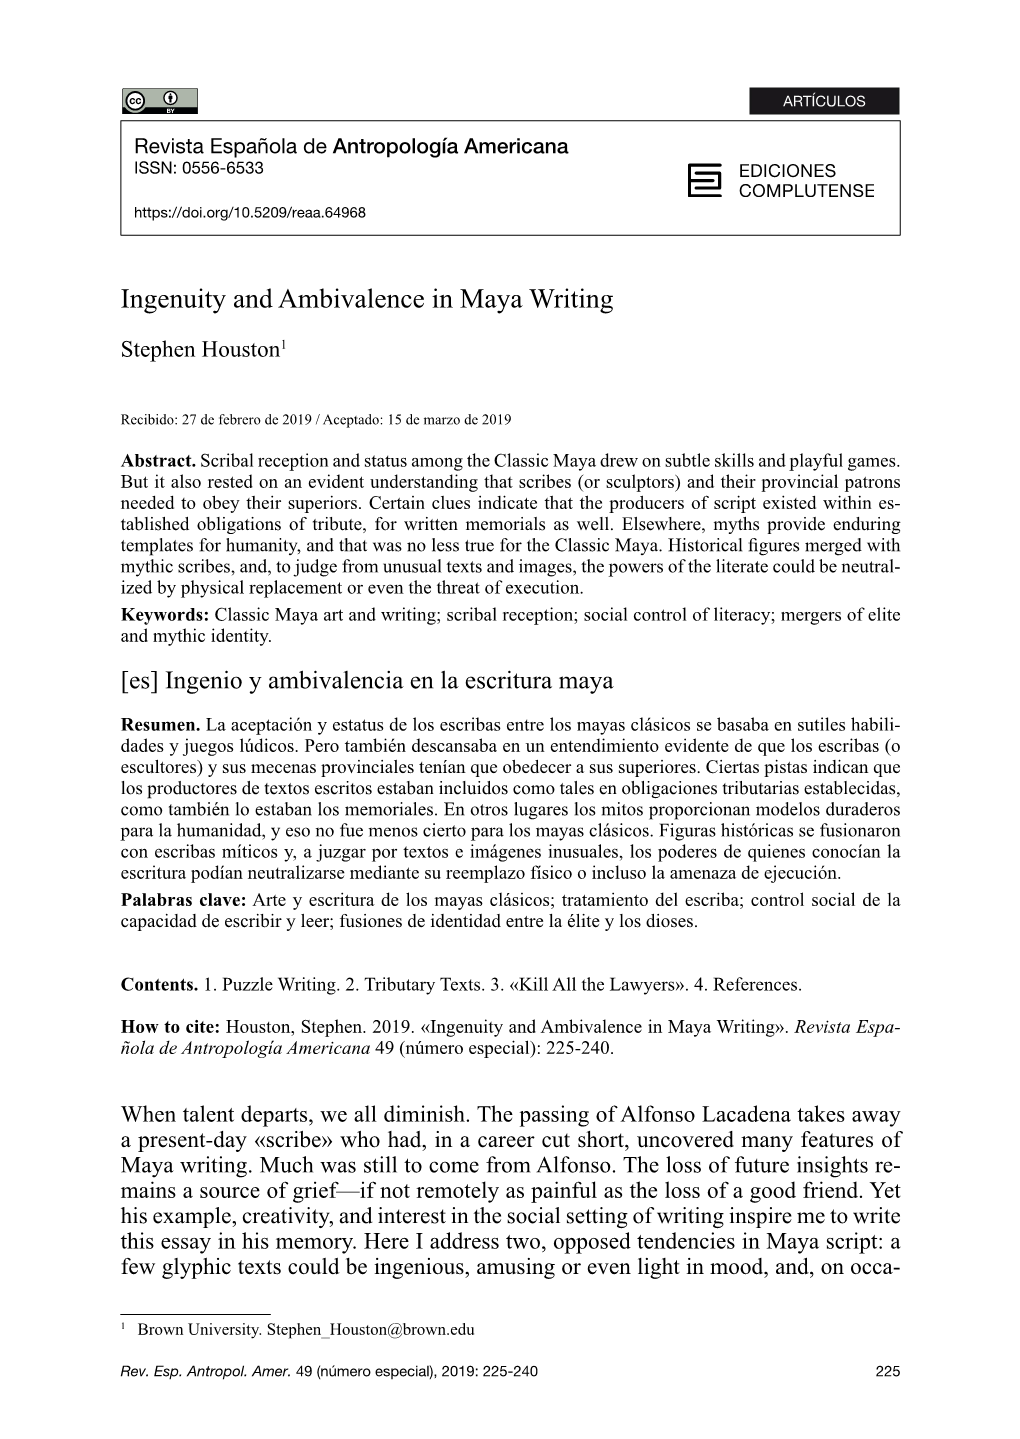 Ingenuity and Ambivalence in Maya Writing